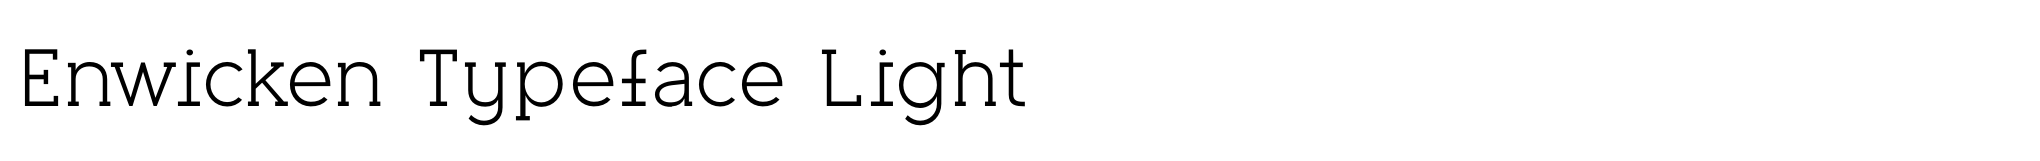 Enwicken Typeface Light image